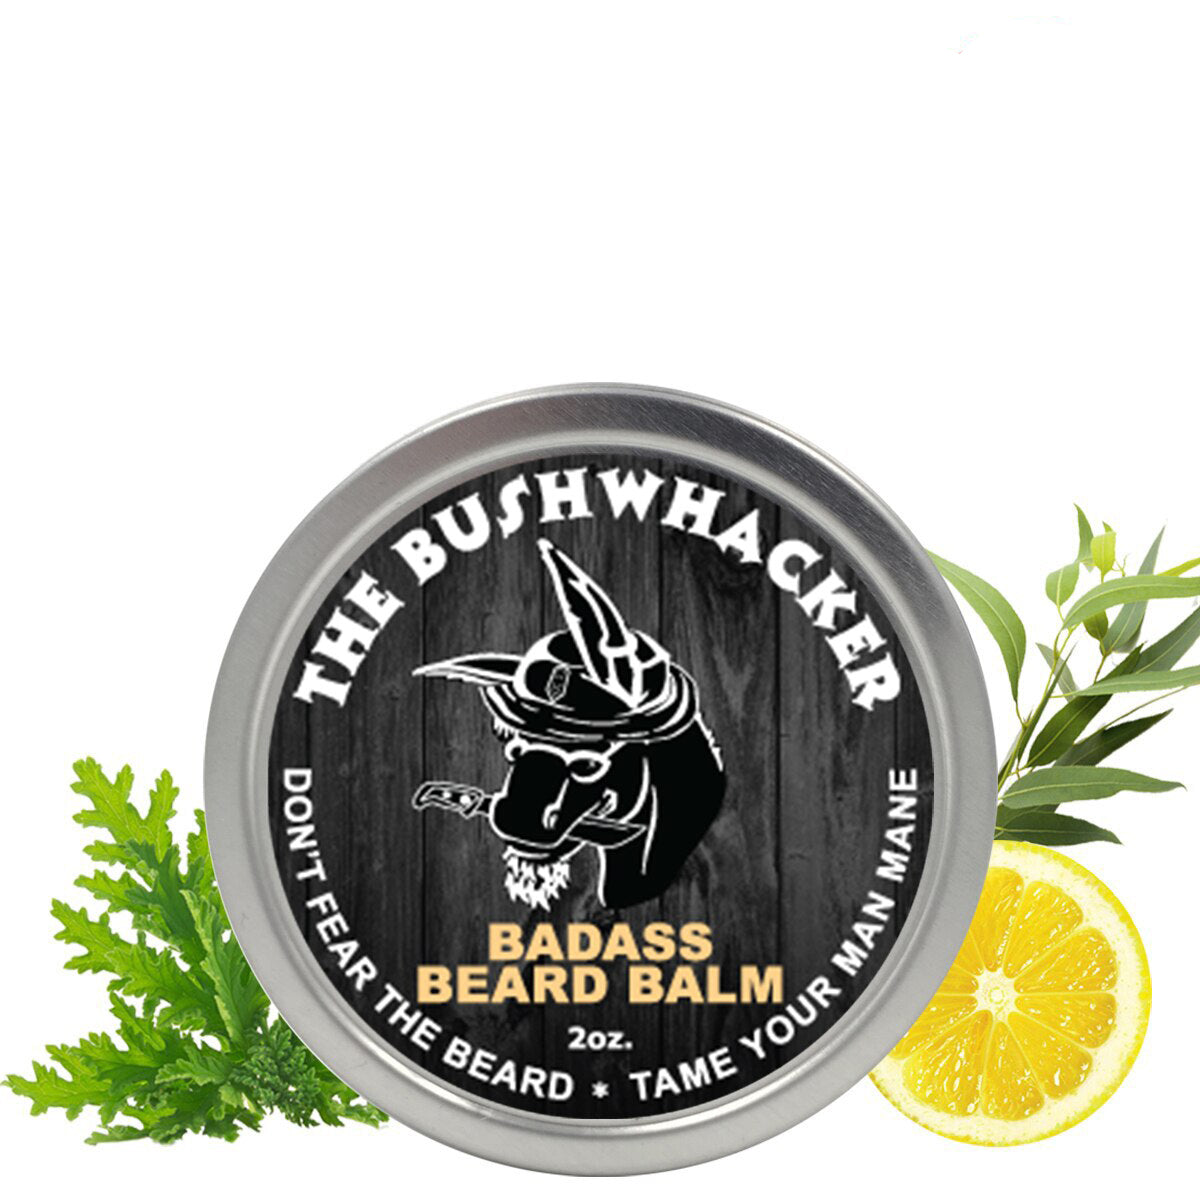 The Bushwhacker Beard Balm